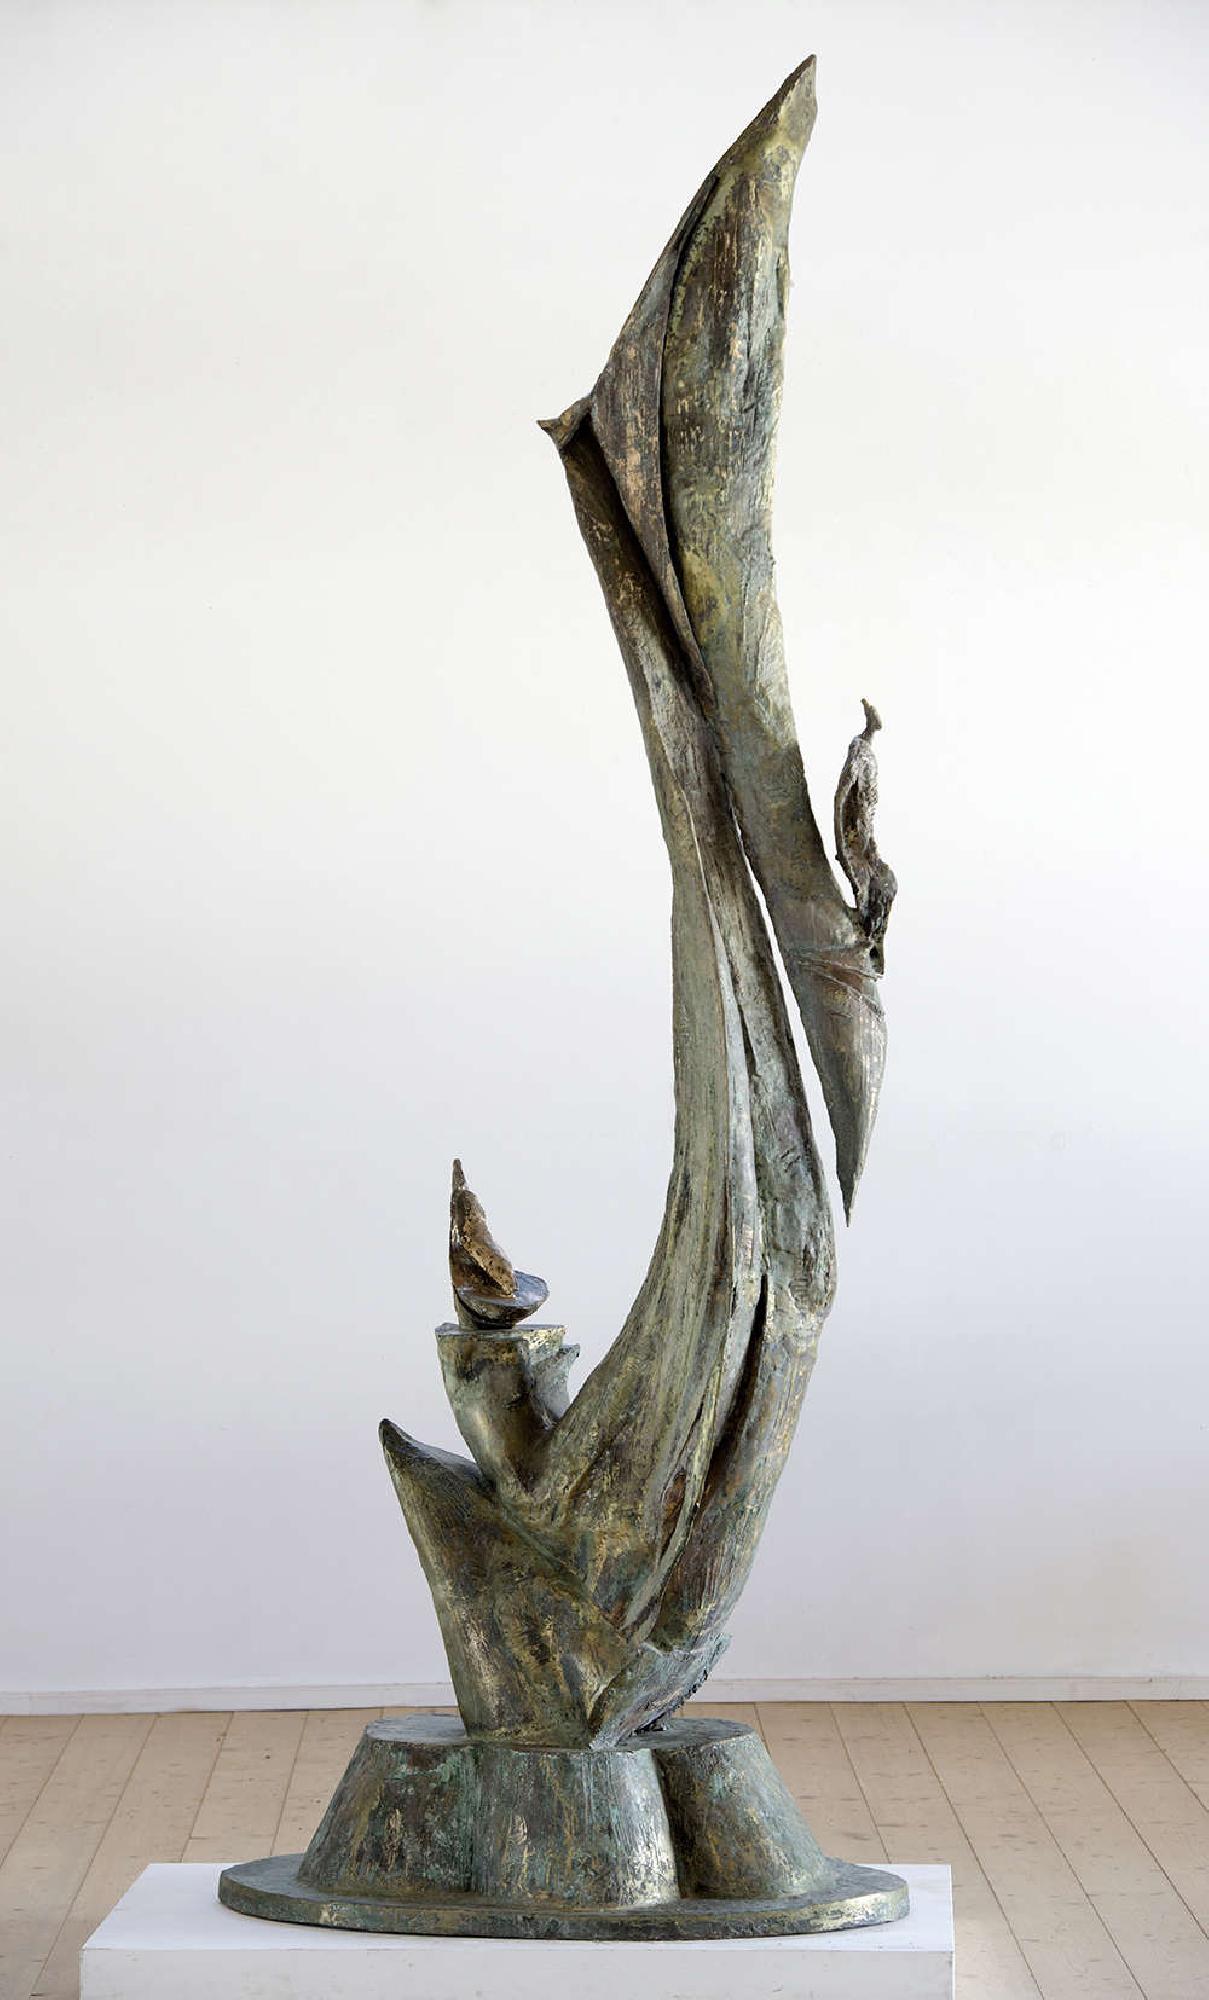 Leonard Lorenz: Entelechie
2011
307 × 100 cm
bronze